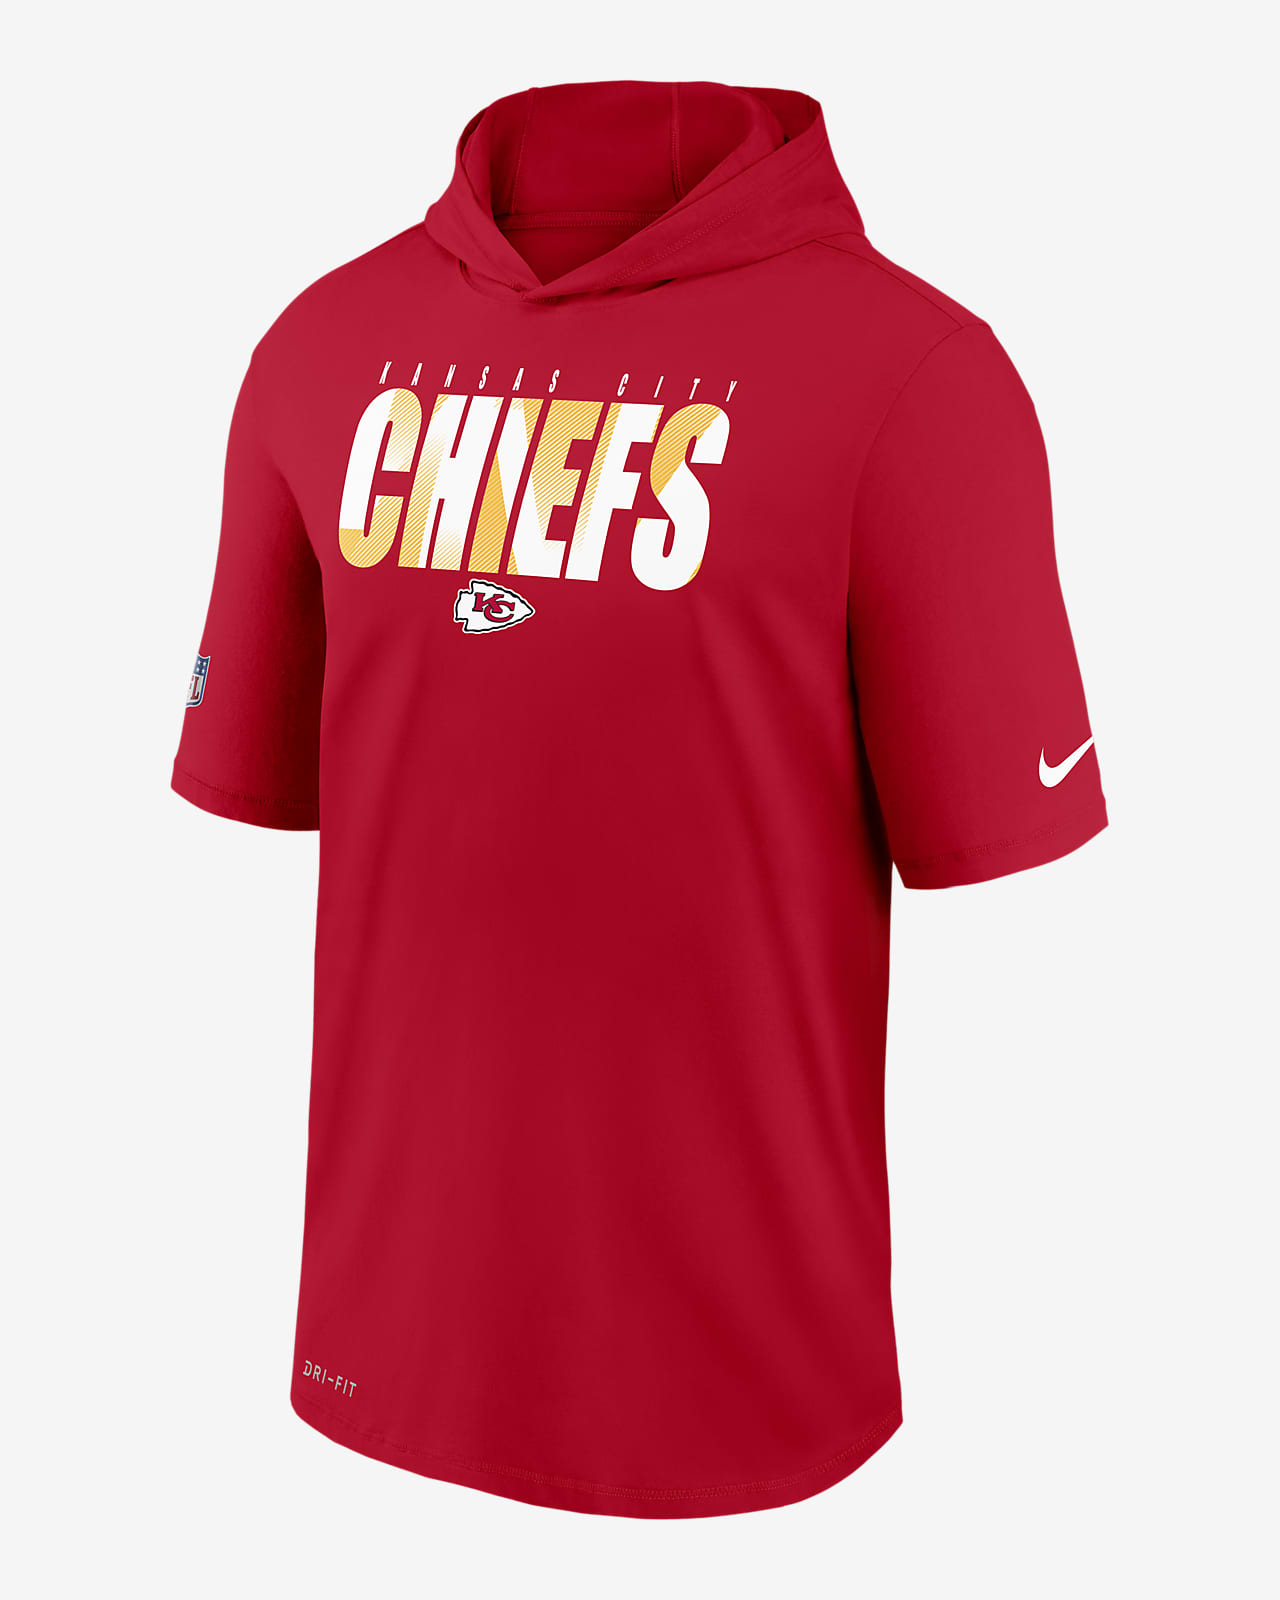 nike chiefs sweatshirt